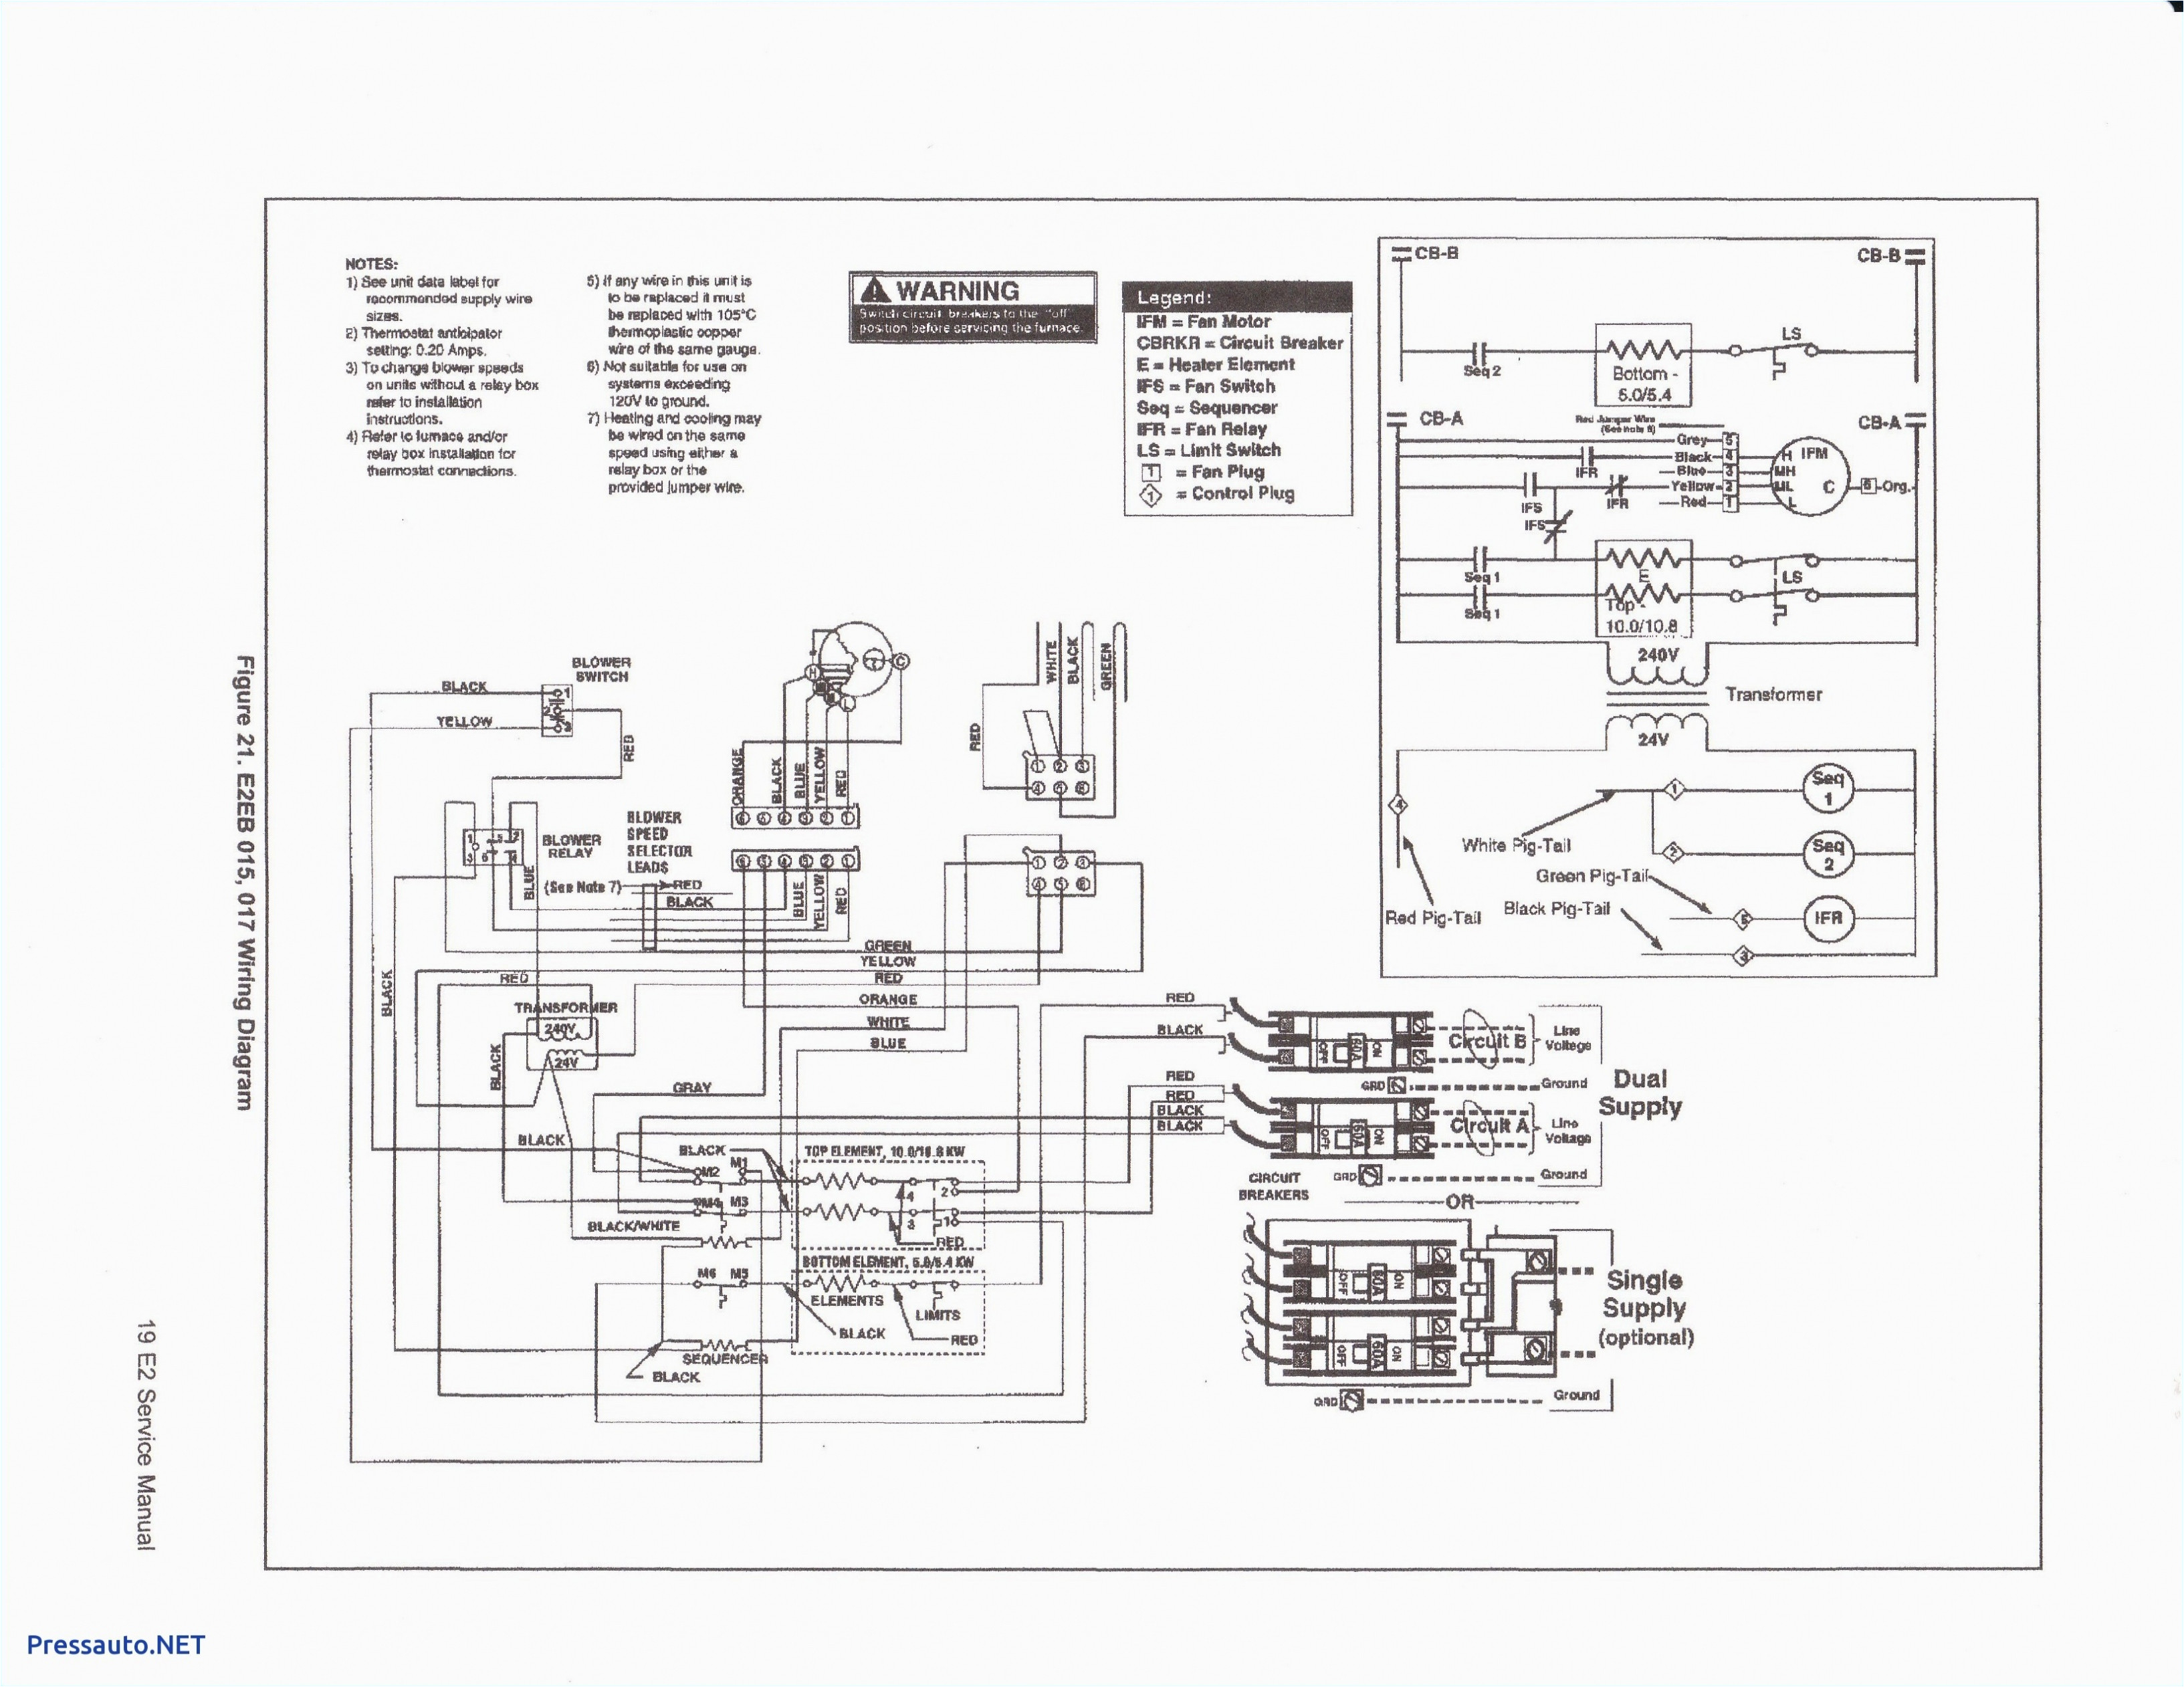 goodman air handler wiring diagram fresh goodman aruf air handler wiring diagram luxury bard heat pump wiring pictures of goodman air handler wiring diagram jpg